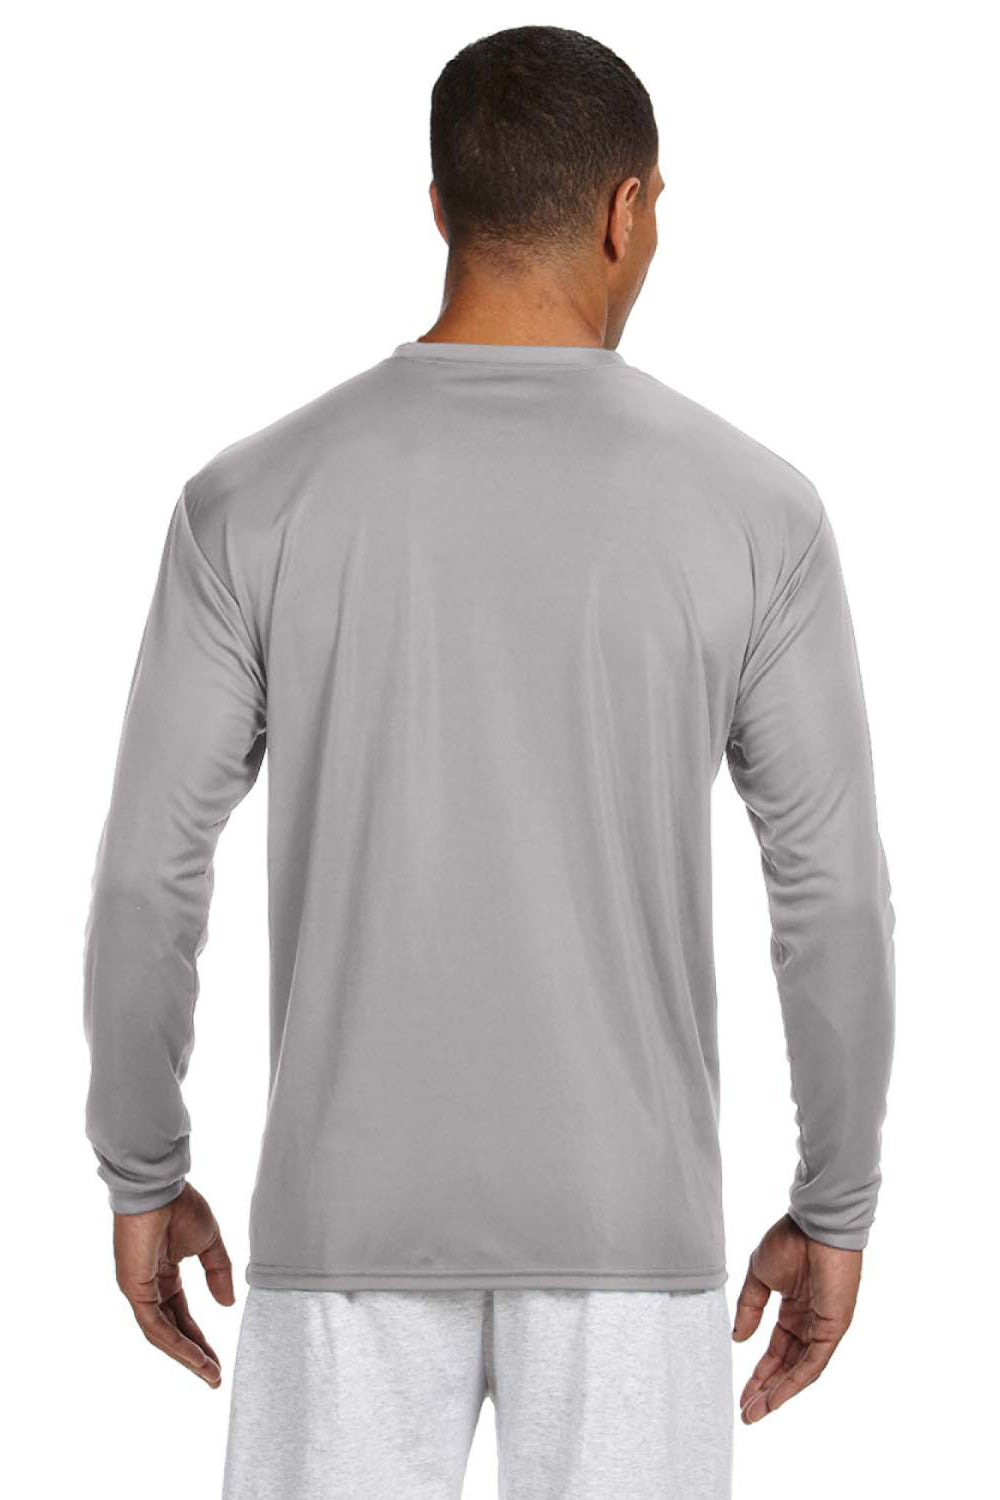 A4 N3165 Mens Performance Moisture Wicking Long Sleeve Crewneck T-Shirt Silver Grey Model Back